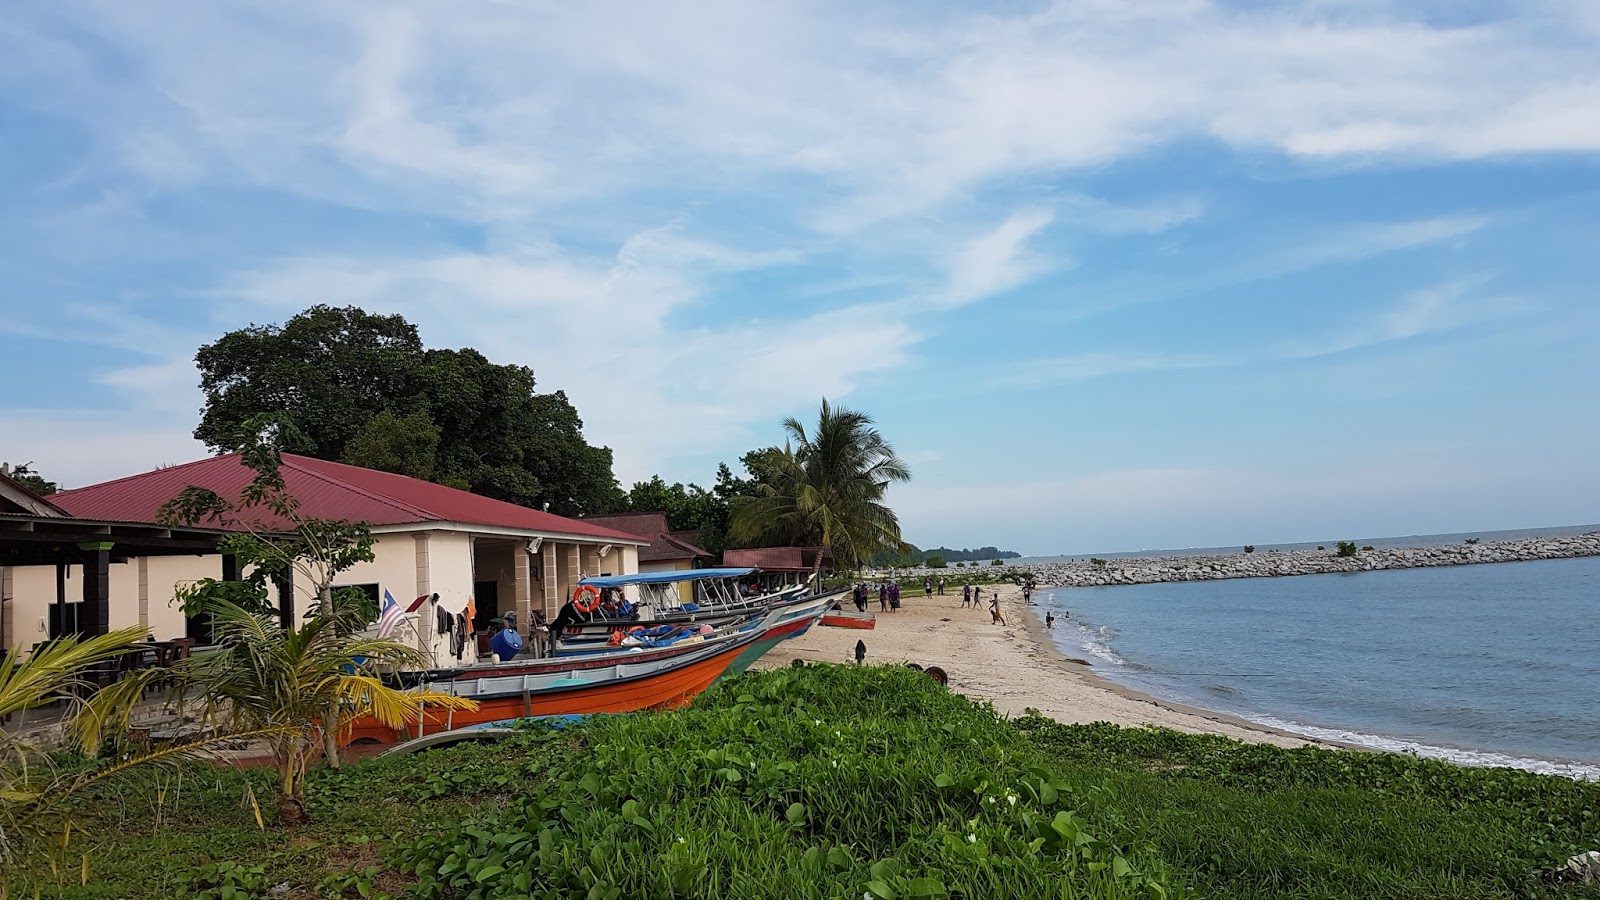 Foto di Telok Gong Beaches e l'insediamento